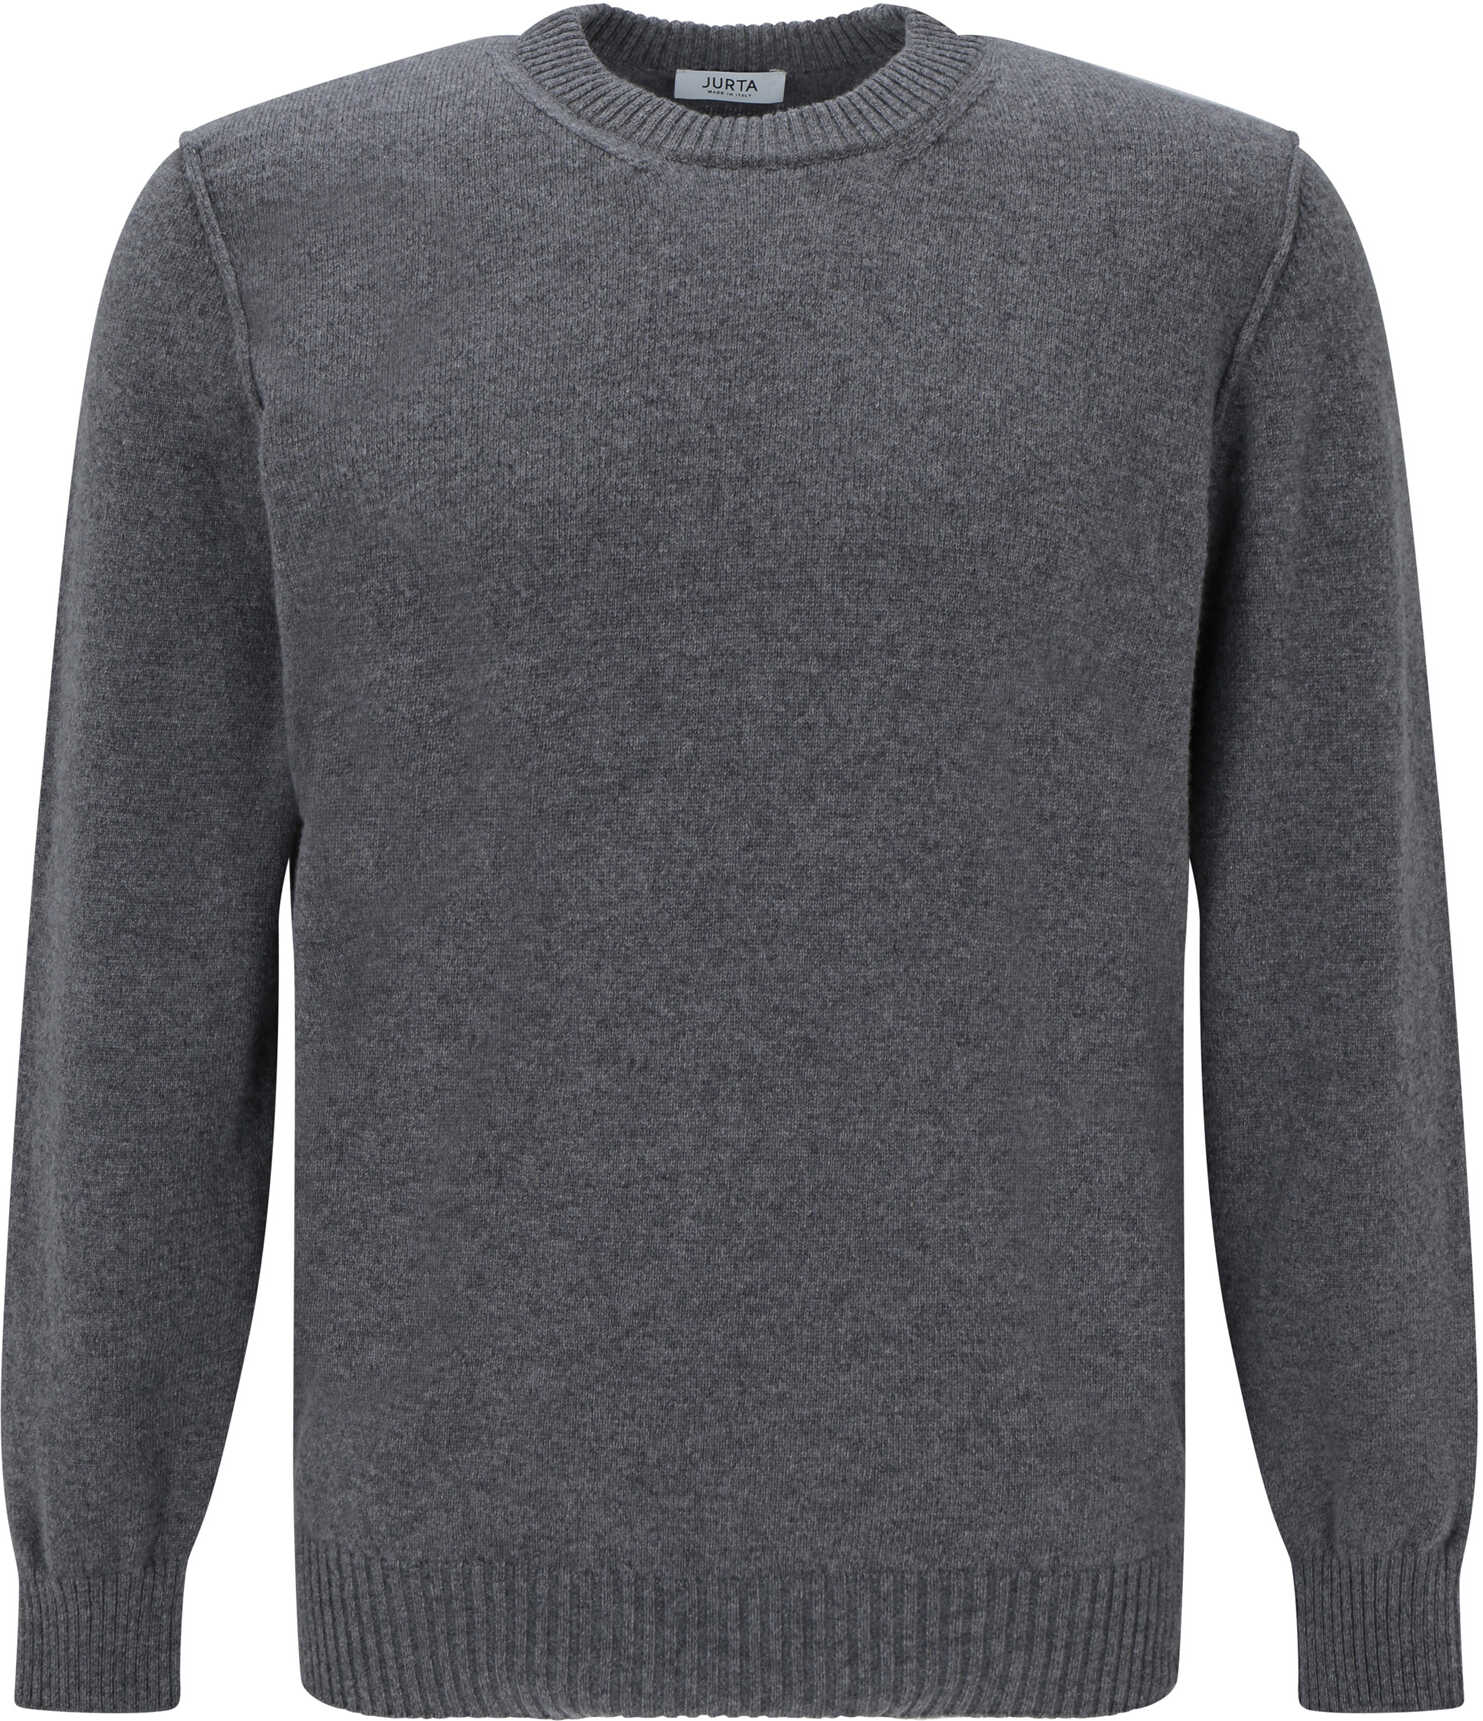 Jurta Sweater 307